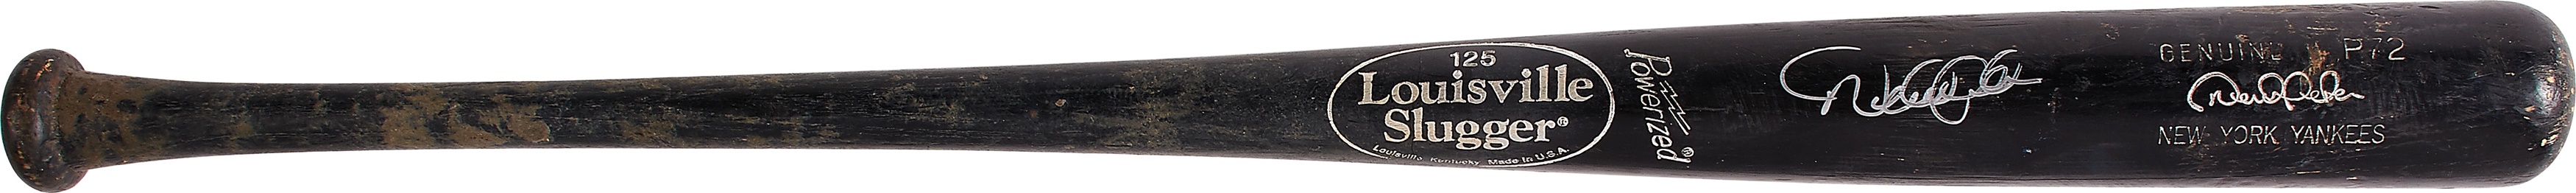 NY Yankees, Giants & Mets - 2014 Derek Jeter Game Used Bat From His Toronto Farwell